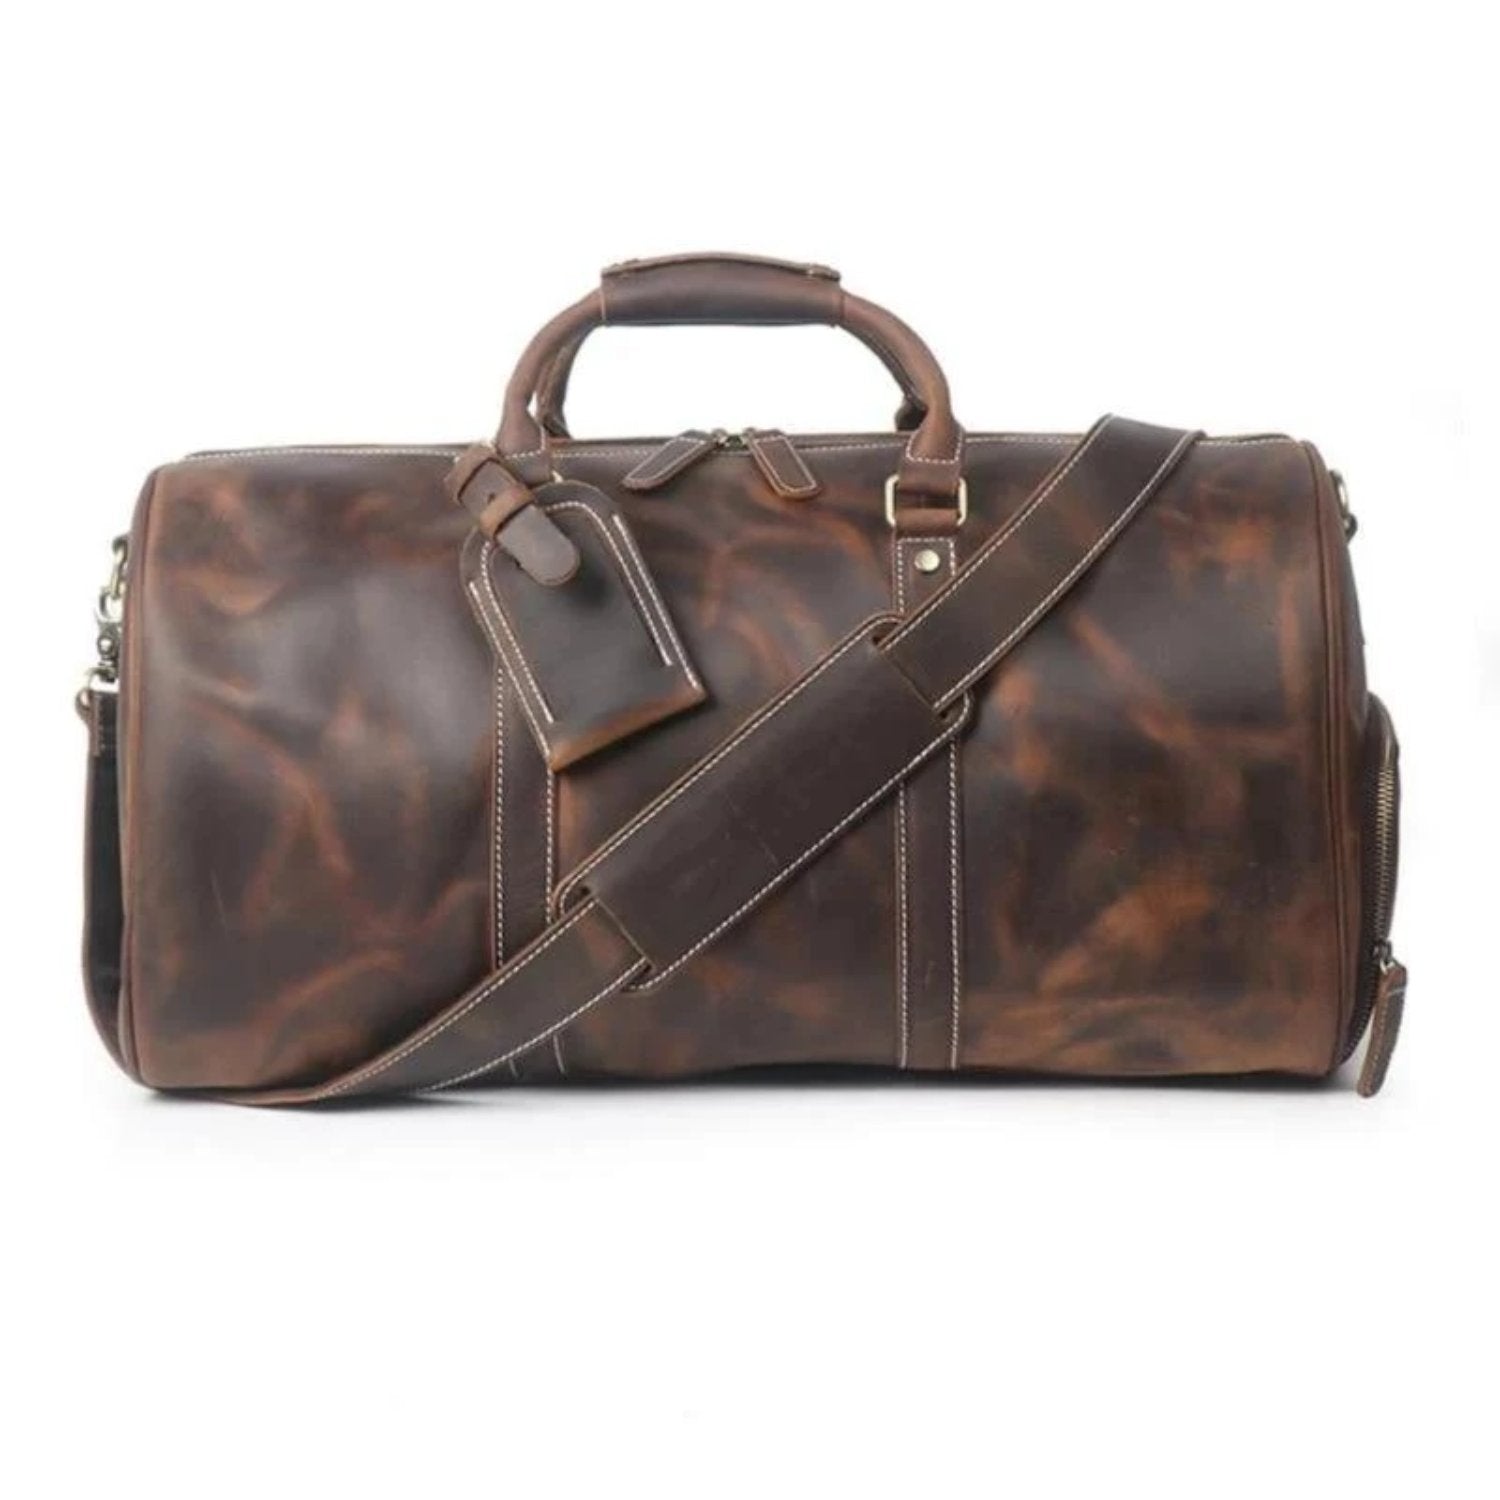 Buy 5 Premium Leatherite Travel Bag Online at Best Price in India on